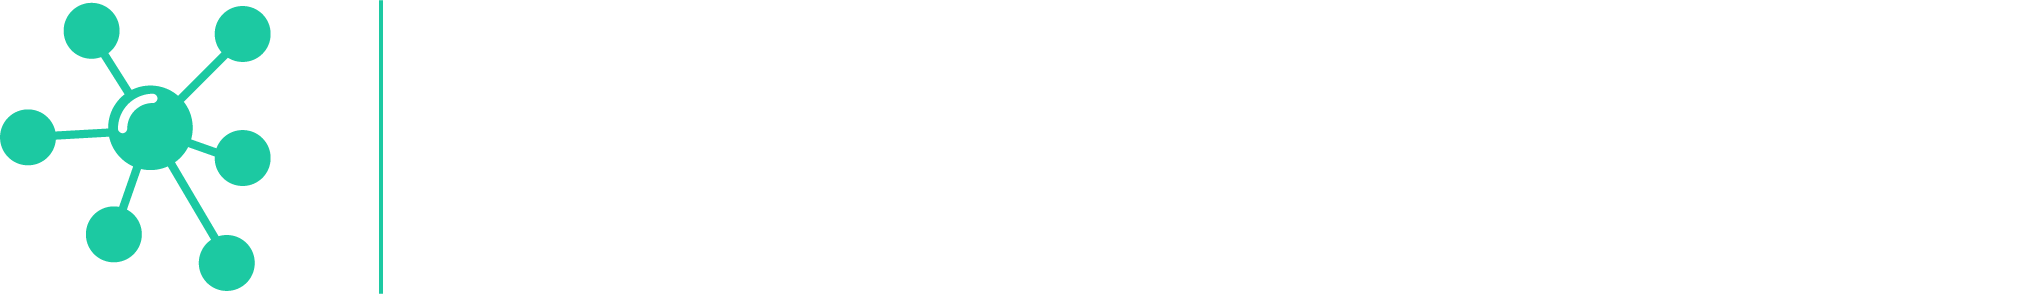 biyoelektronik-logo-1@4x